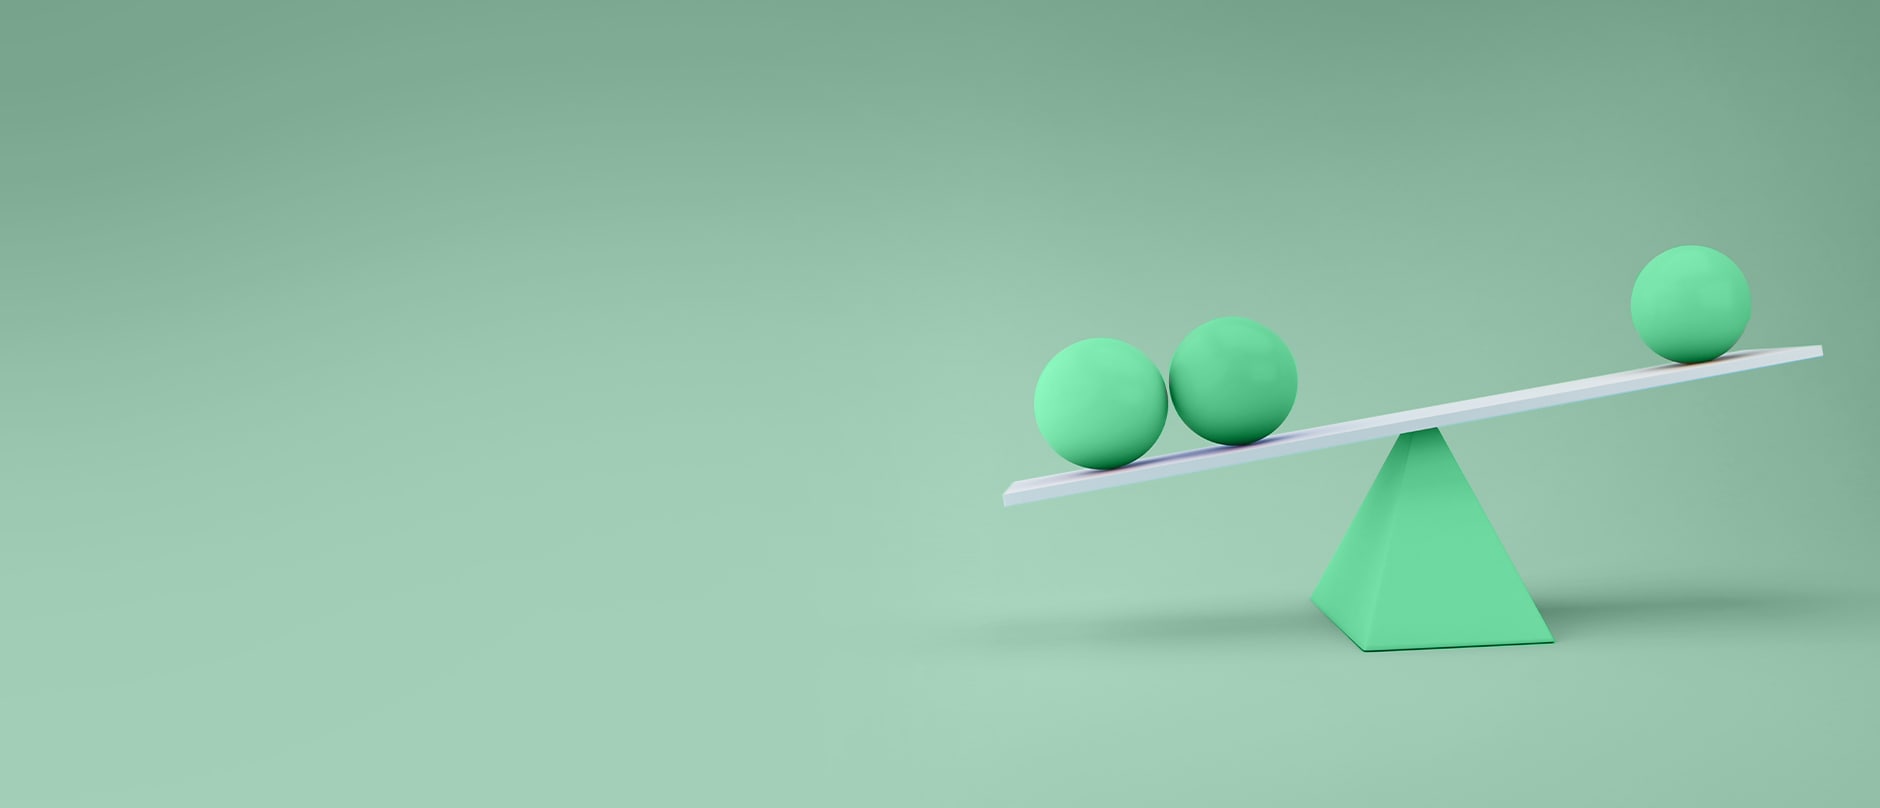 three green balls balancing on board with green triangle